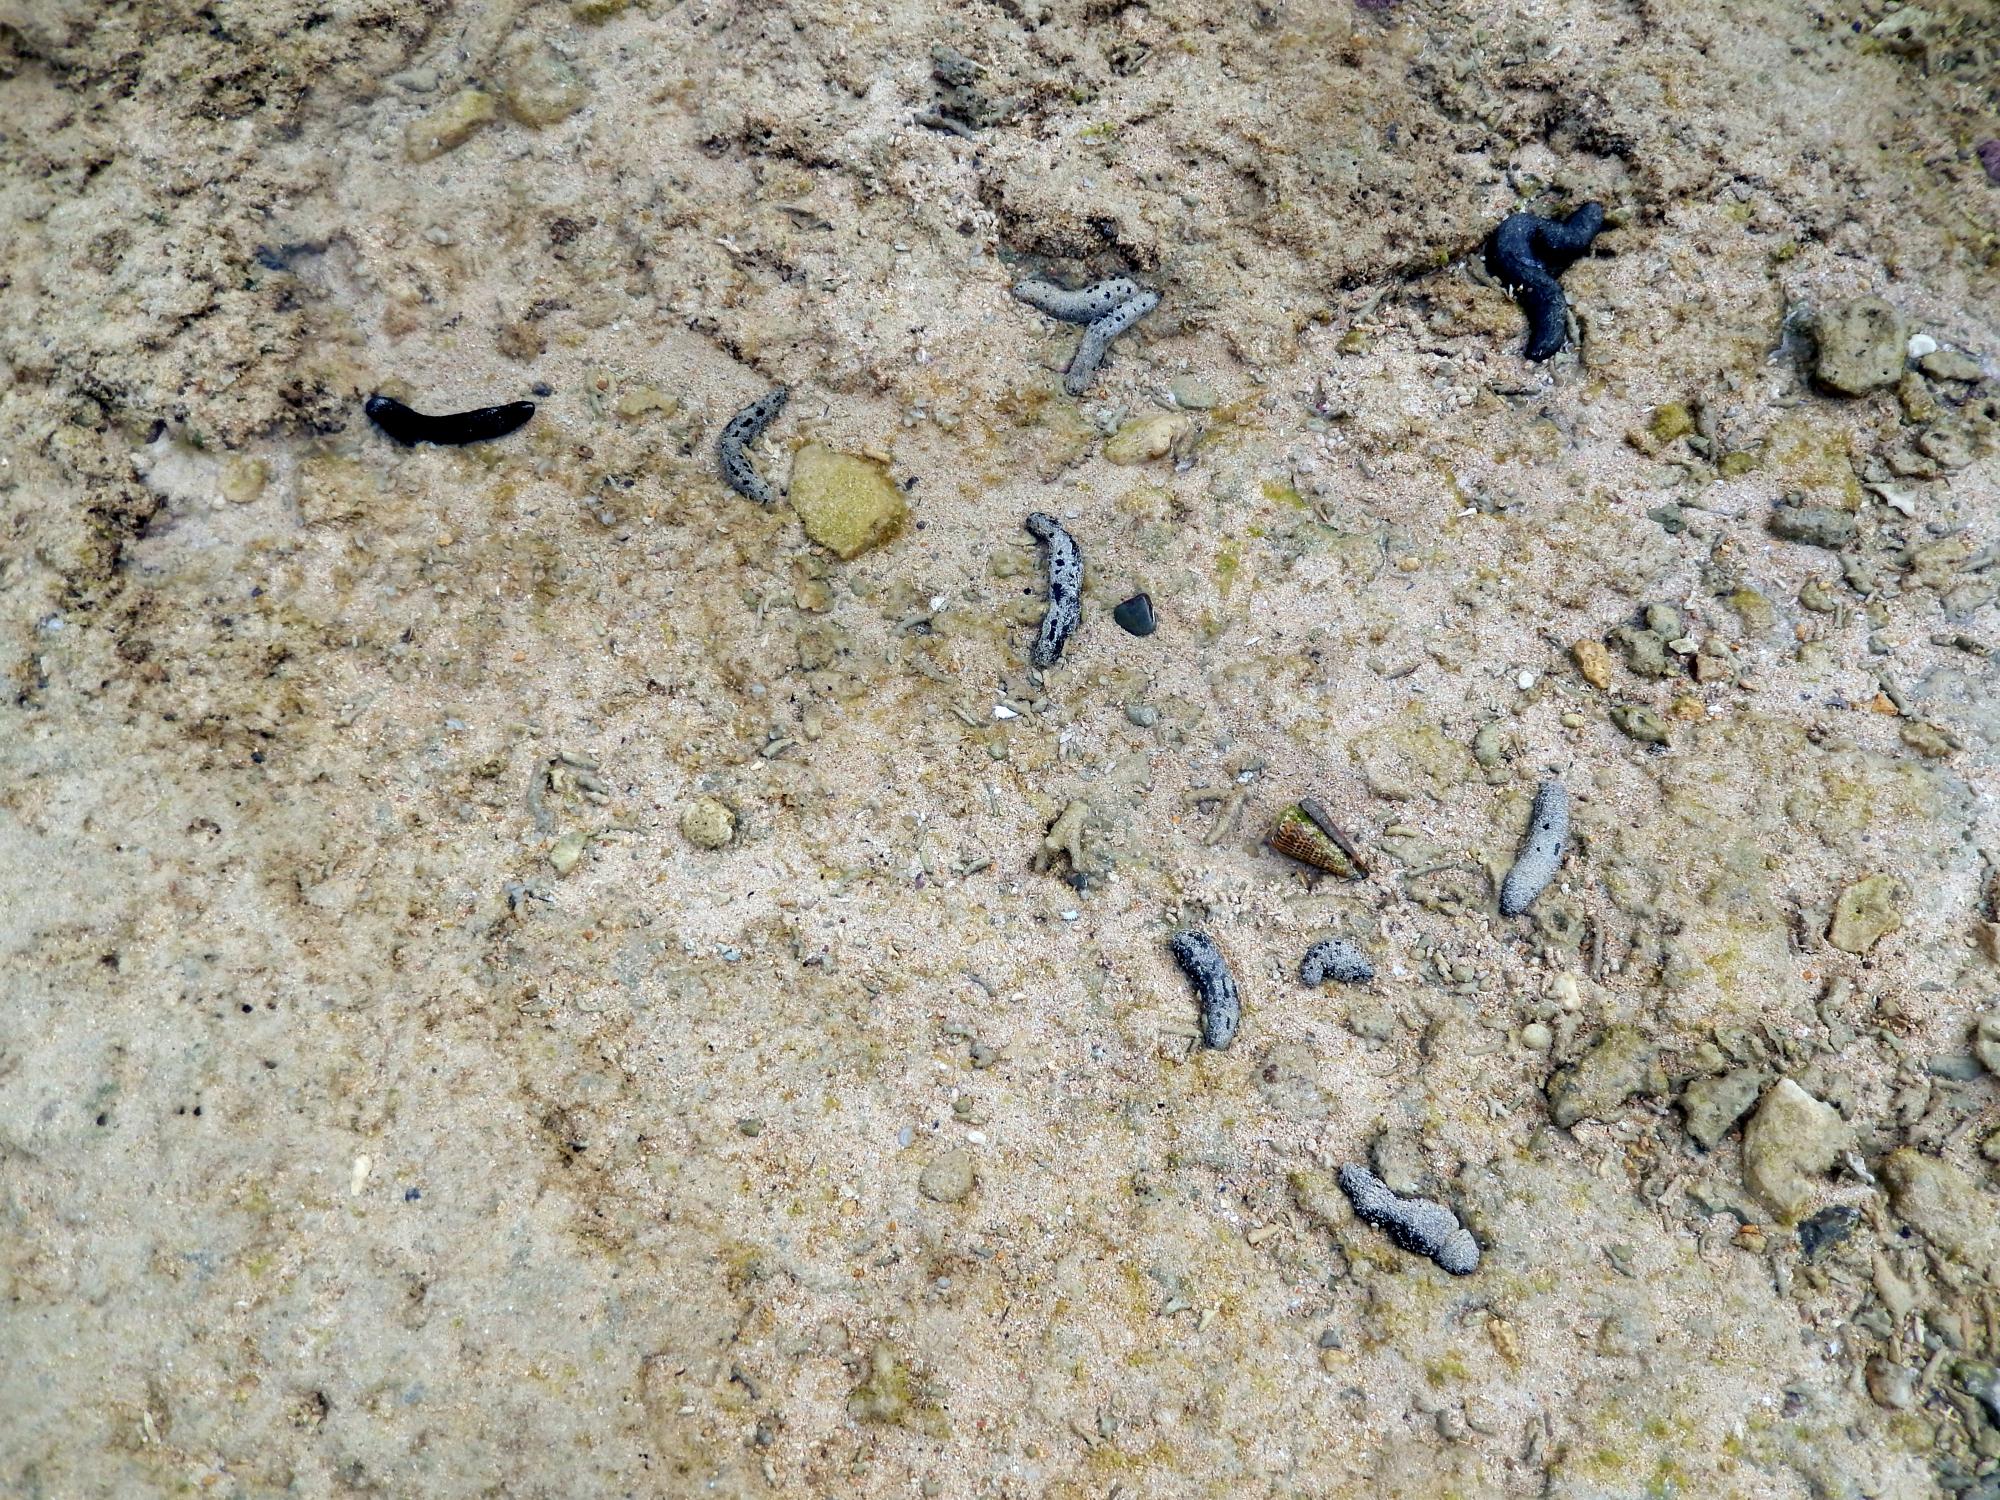 Okinawa - Slugs